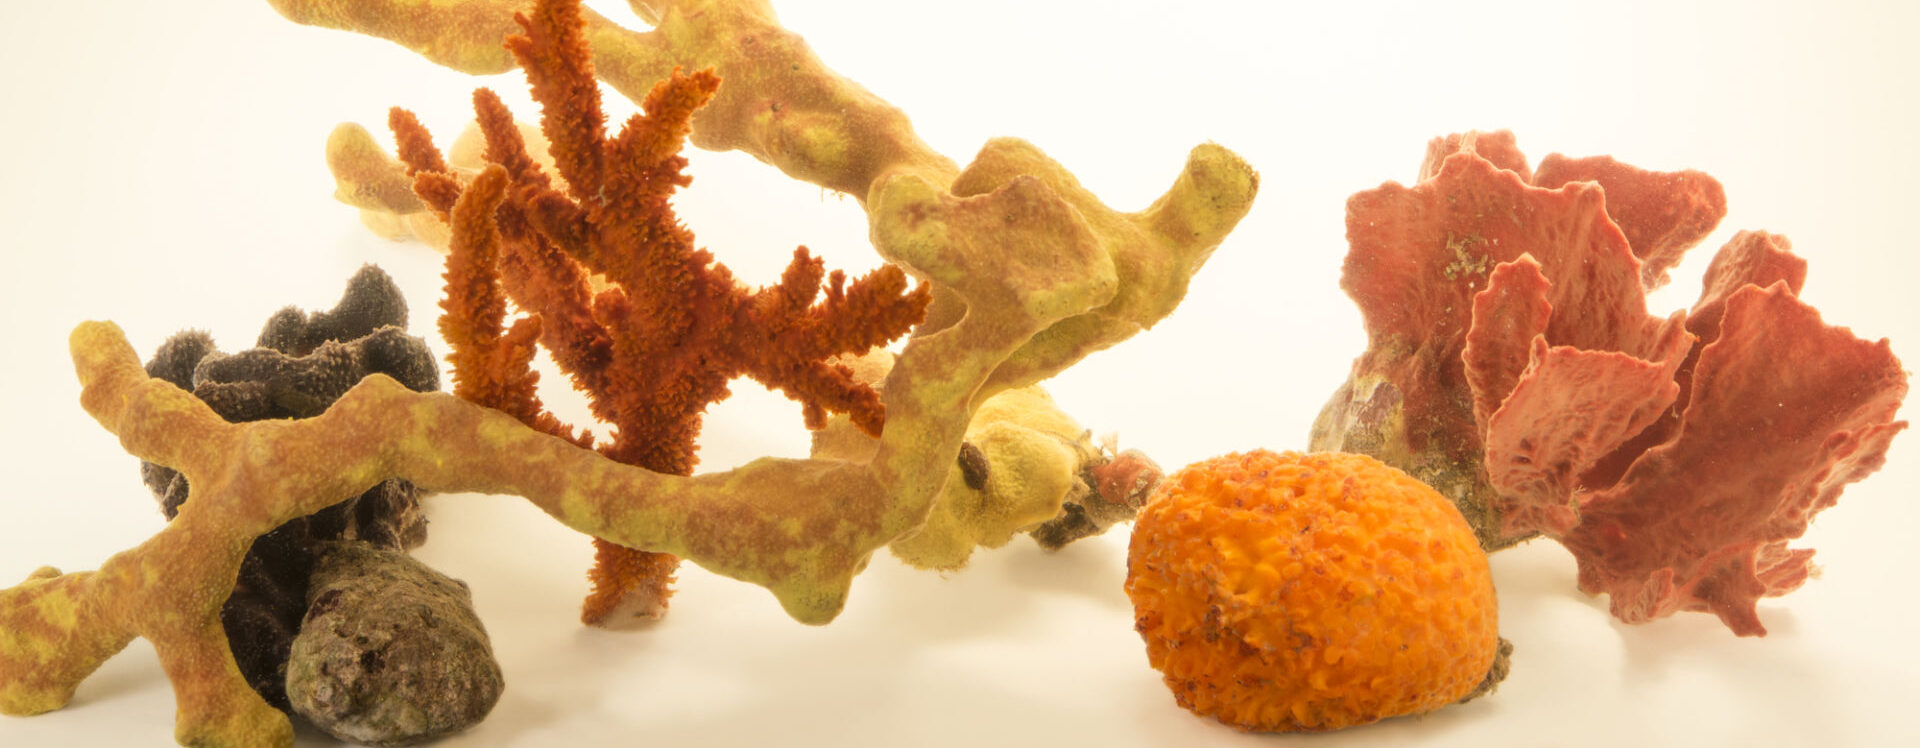 Porifera / Sponges - Gulf Specimen Marine Lab